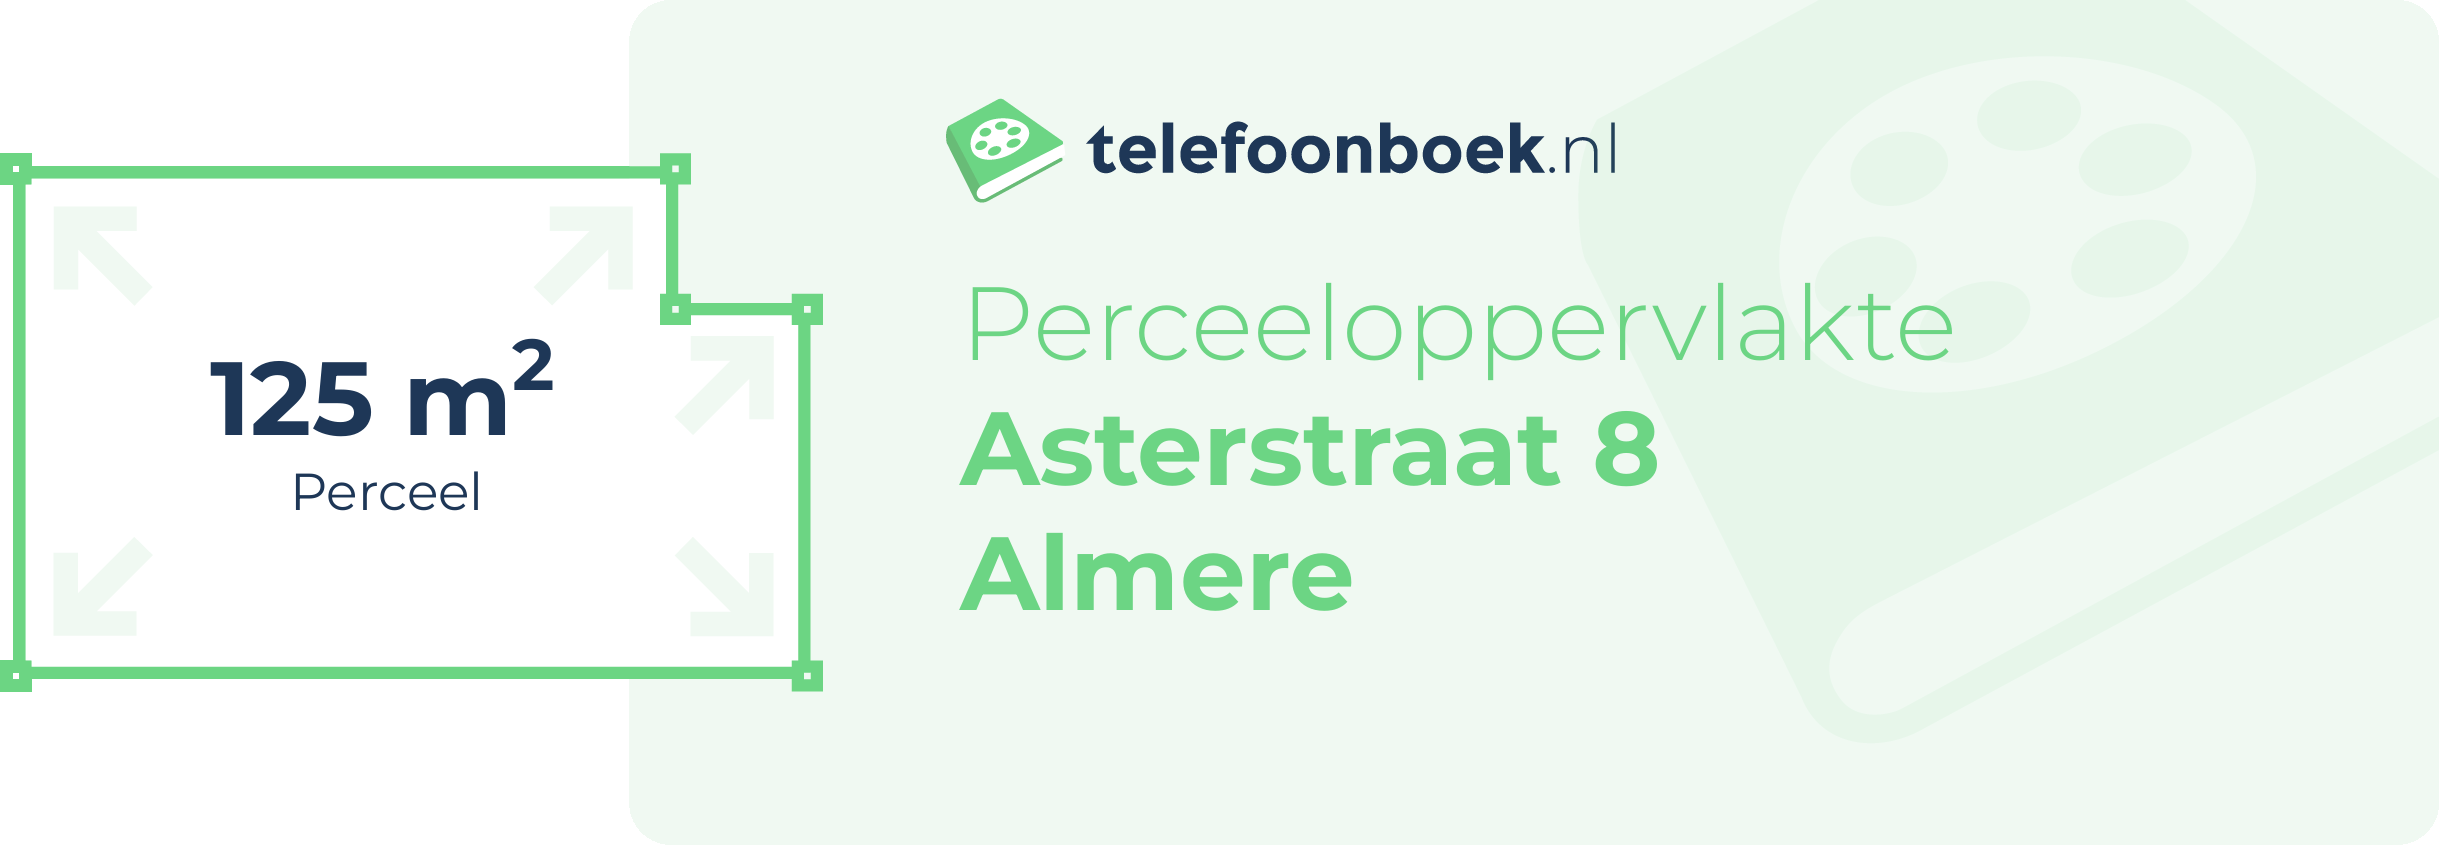 Perceeloppervlakte Asterstraat 8 Almere